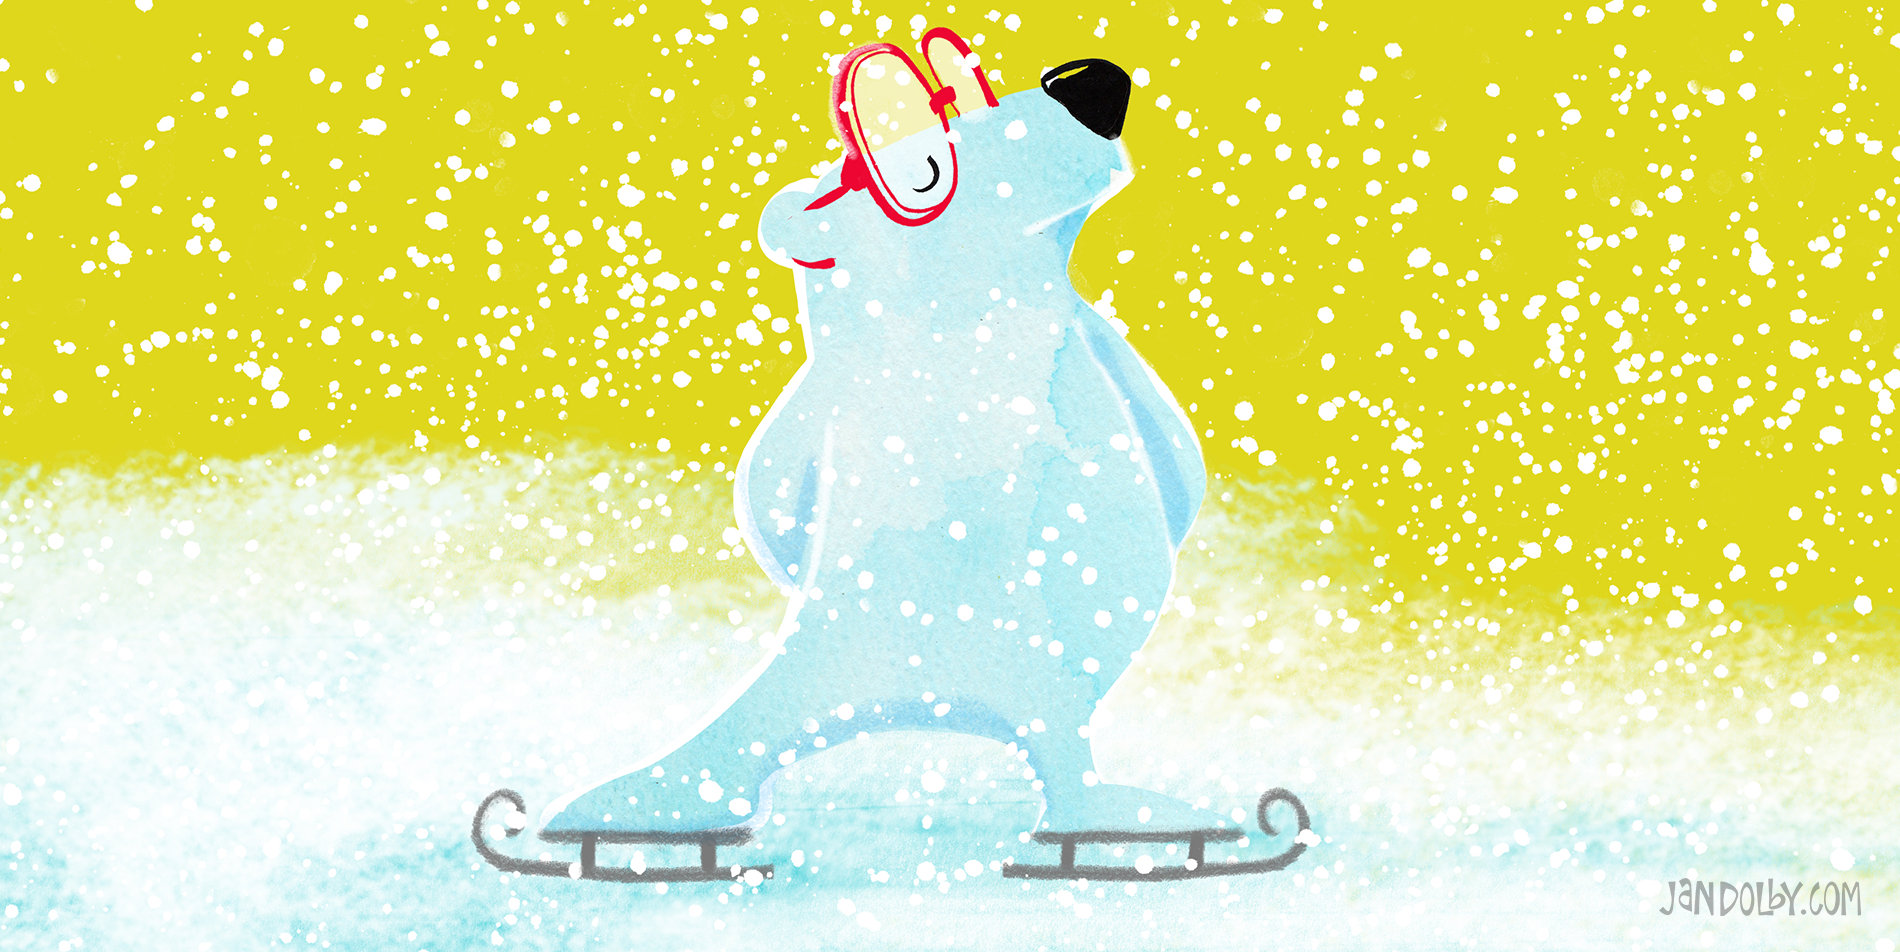 image description: polar bear skating on ice